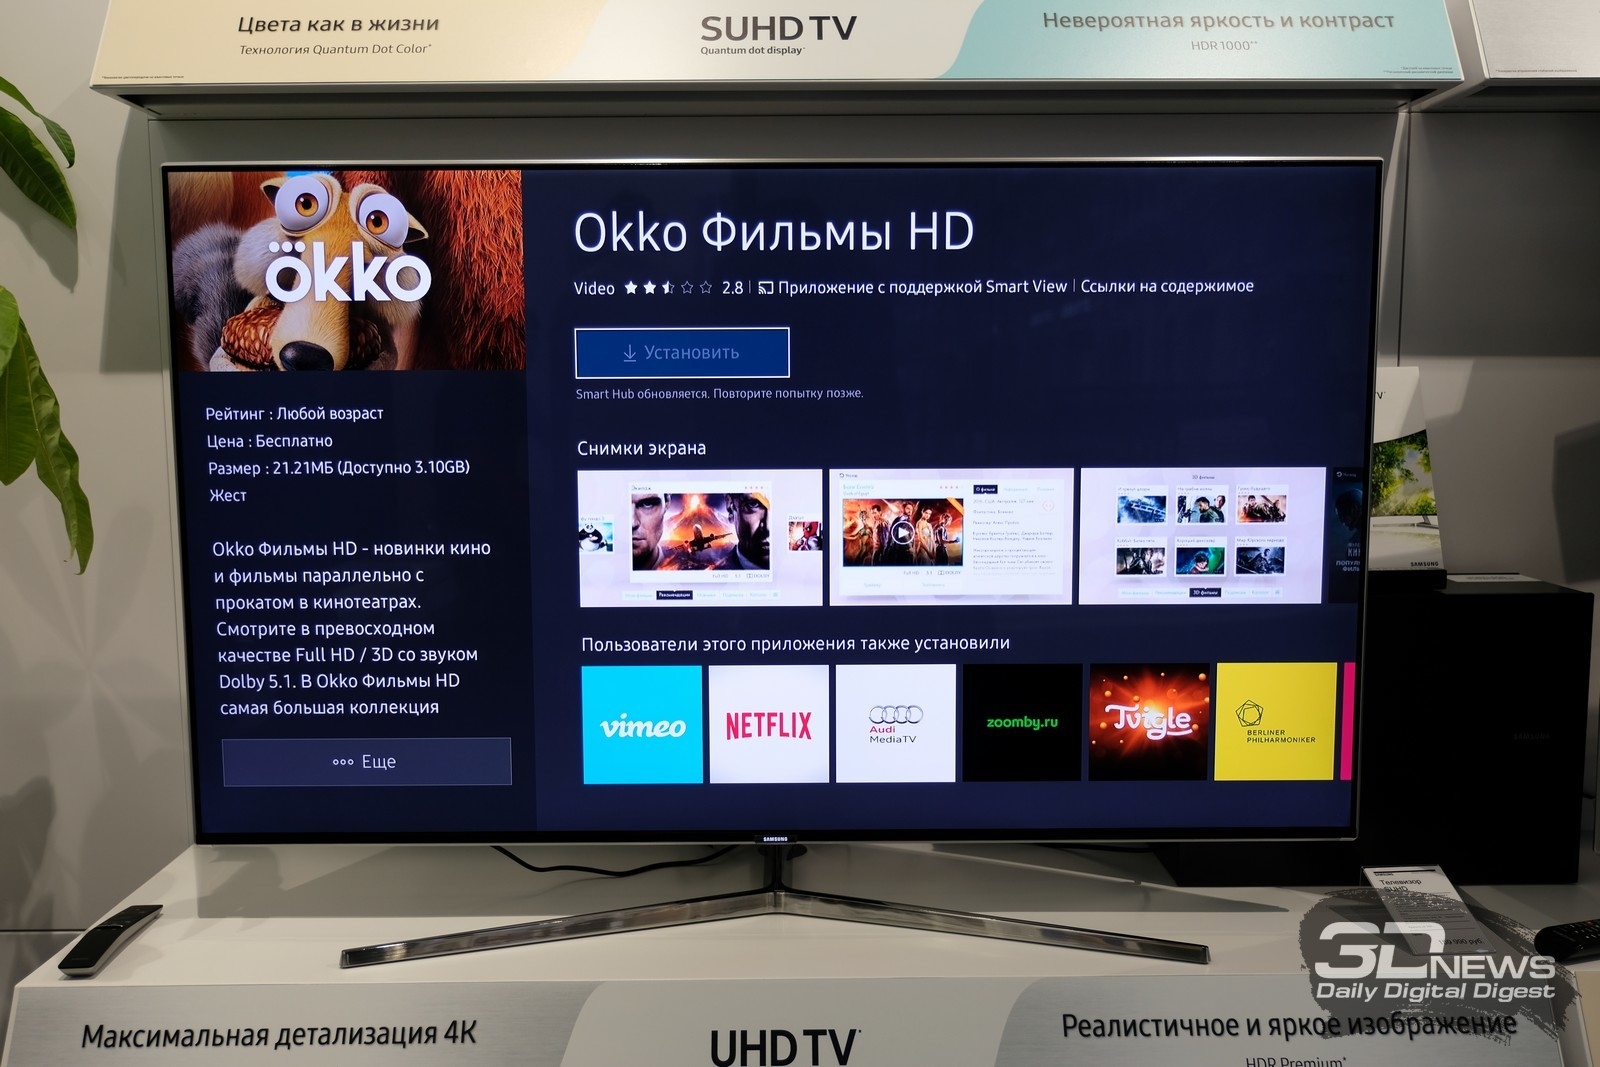 Okko tv login. Okko на телевизоре. Okko приложение. ОККО смарт ТВ. Samsung Smart Hub приложения.